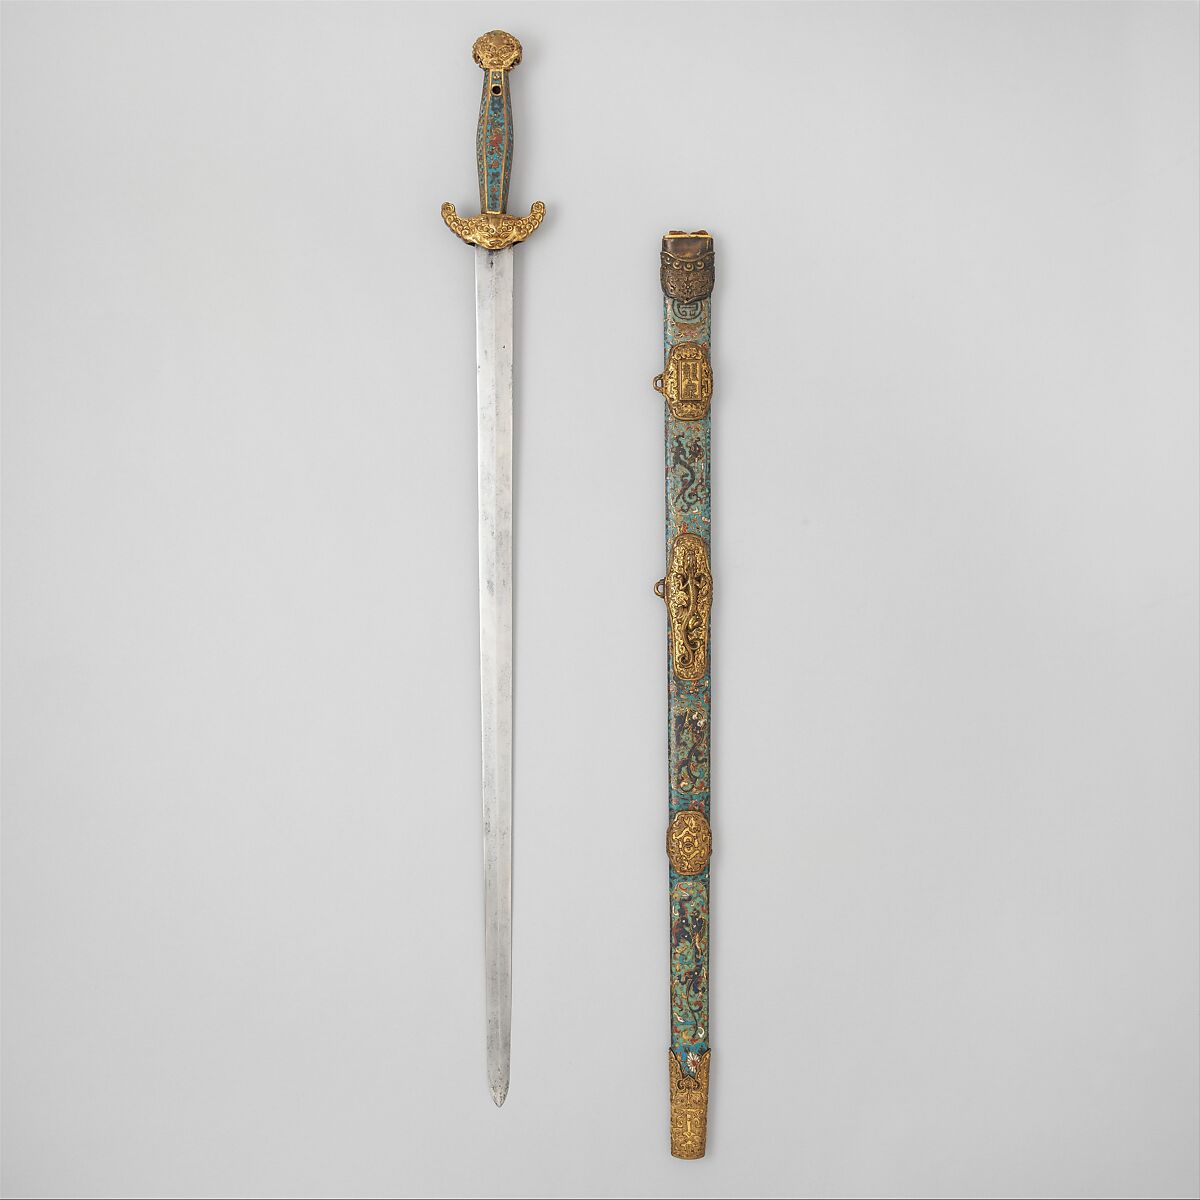 Sword with Scabbard, Steel, brass, enamel, wood, Chinese 